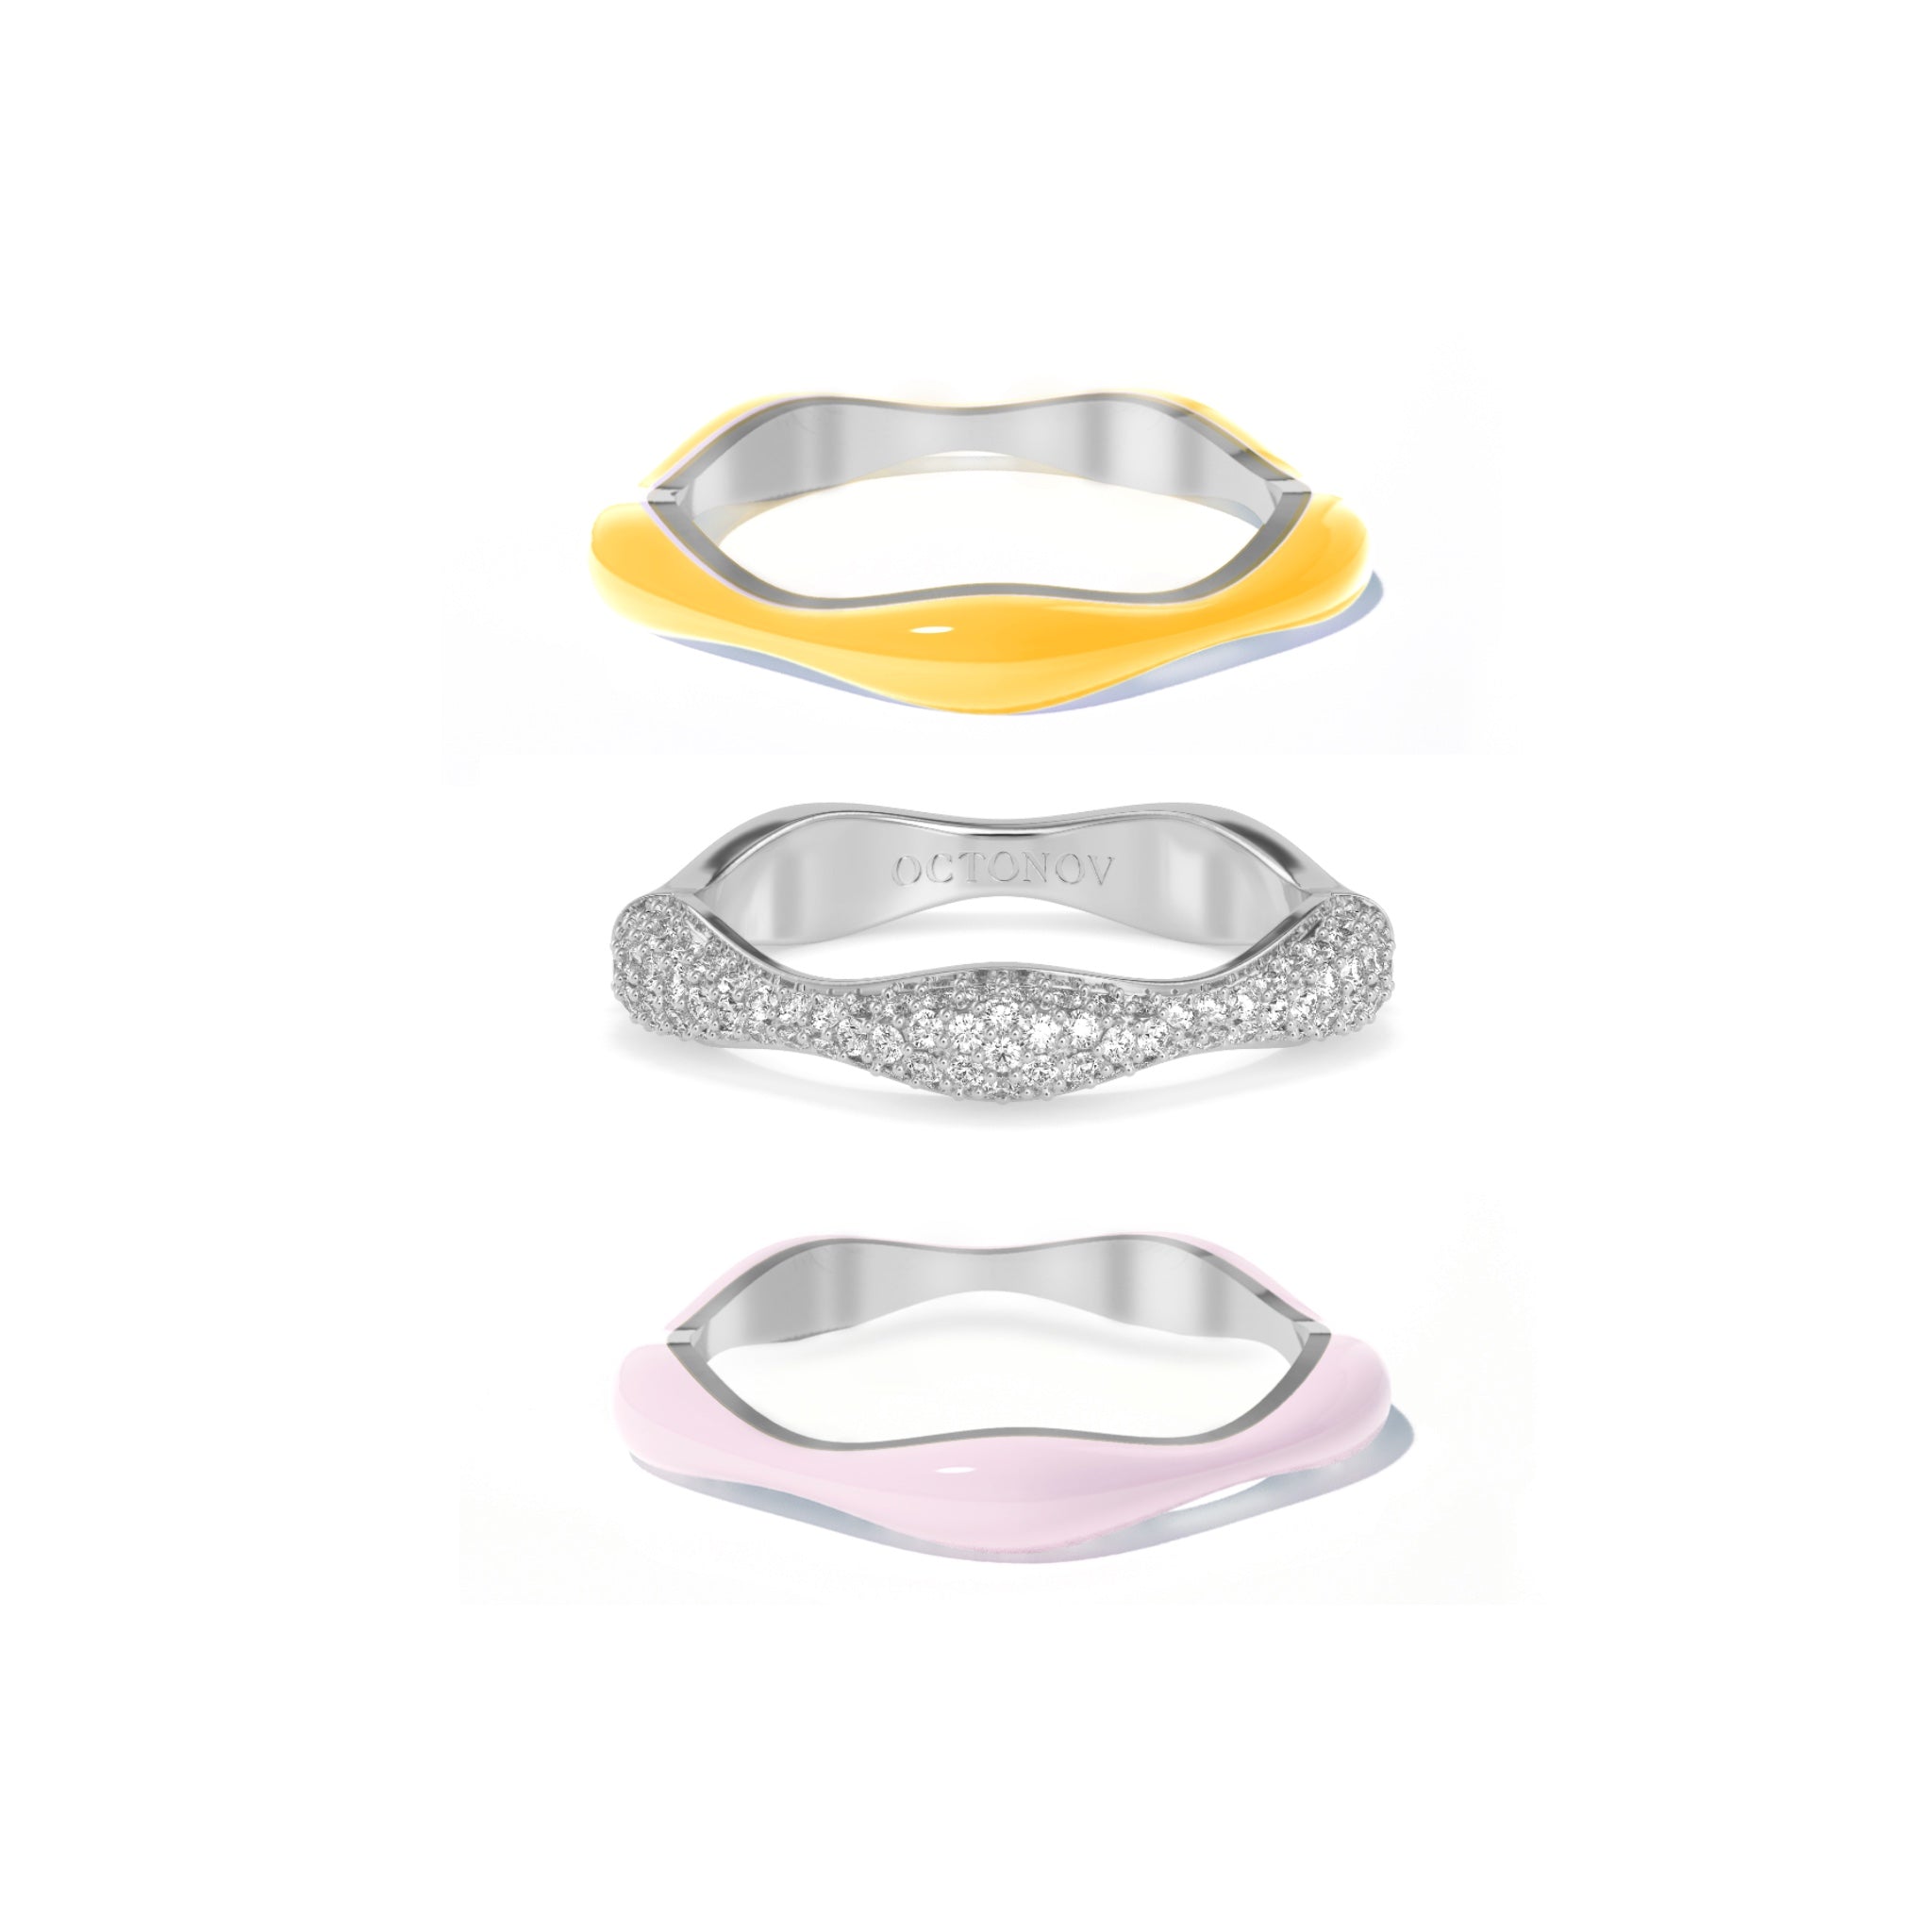 Sunset Sorbet Swirls Enamel & Diamond Swirls Stacker Ring Set in Yellow + Light Pink - Octonov 